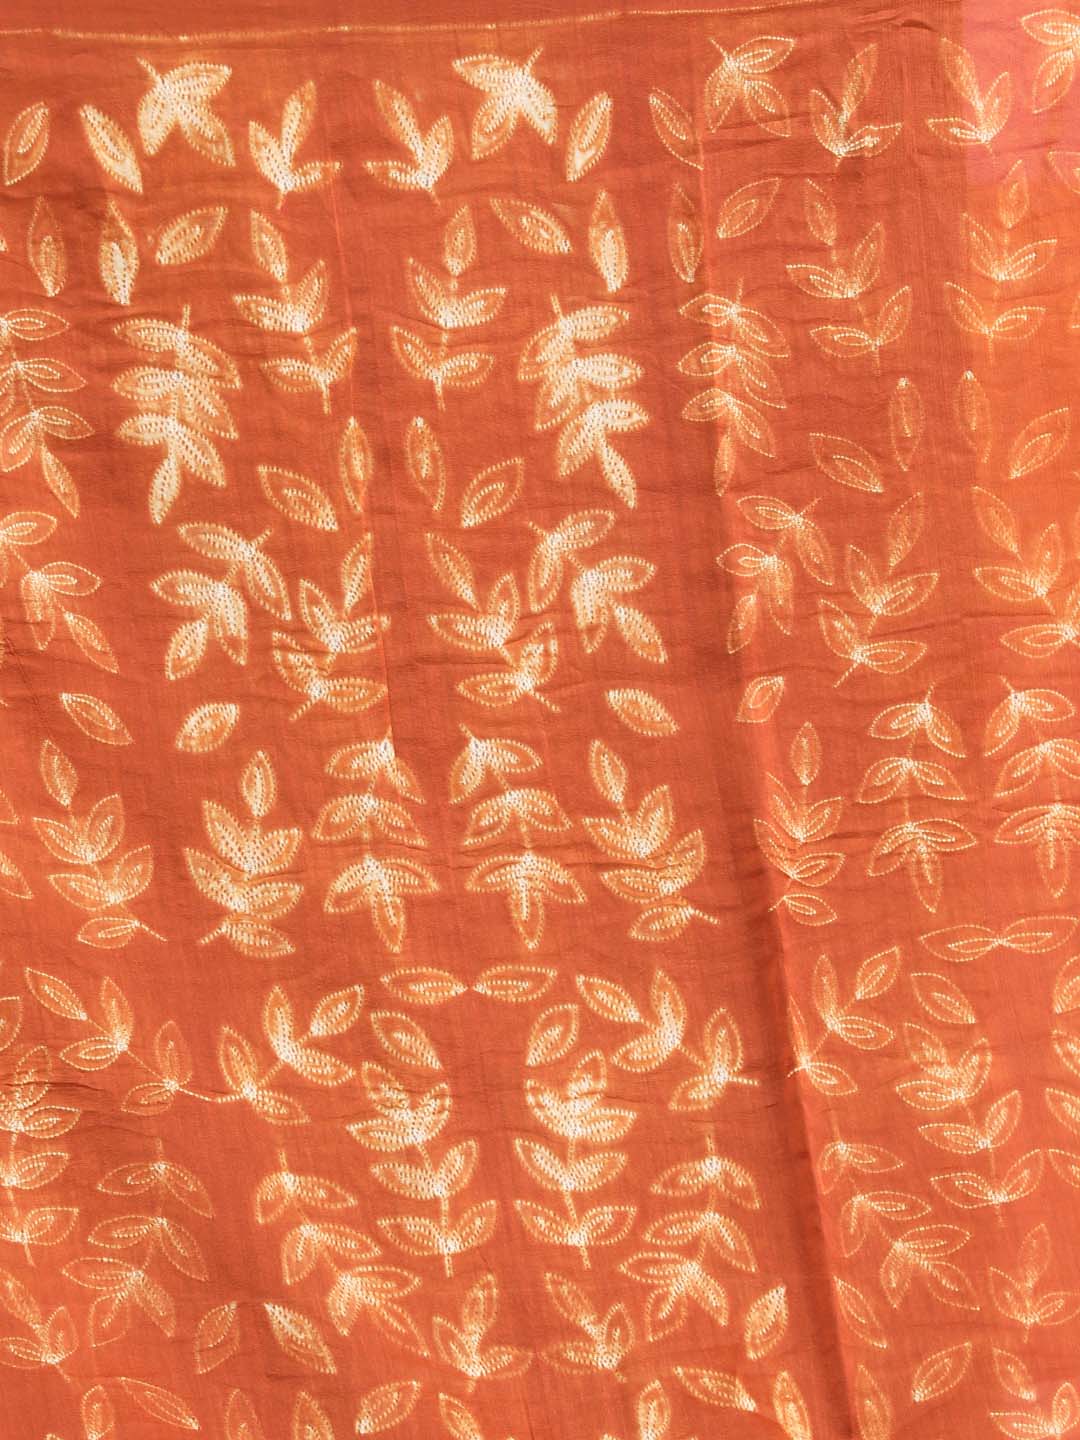 Indethnic Shibori Silk Cotton Saree in Rust - Saree Detail View